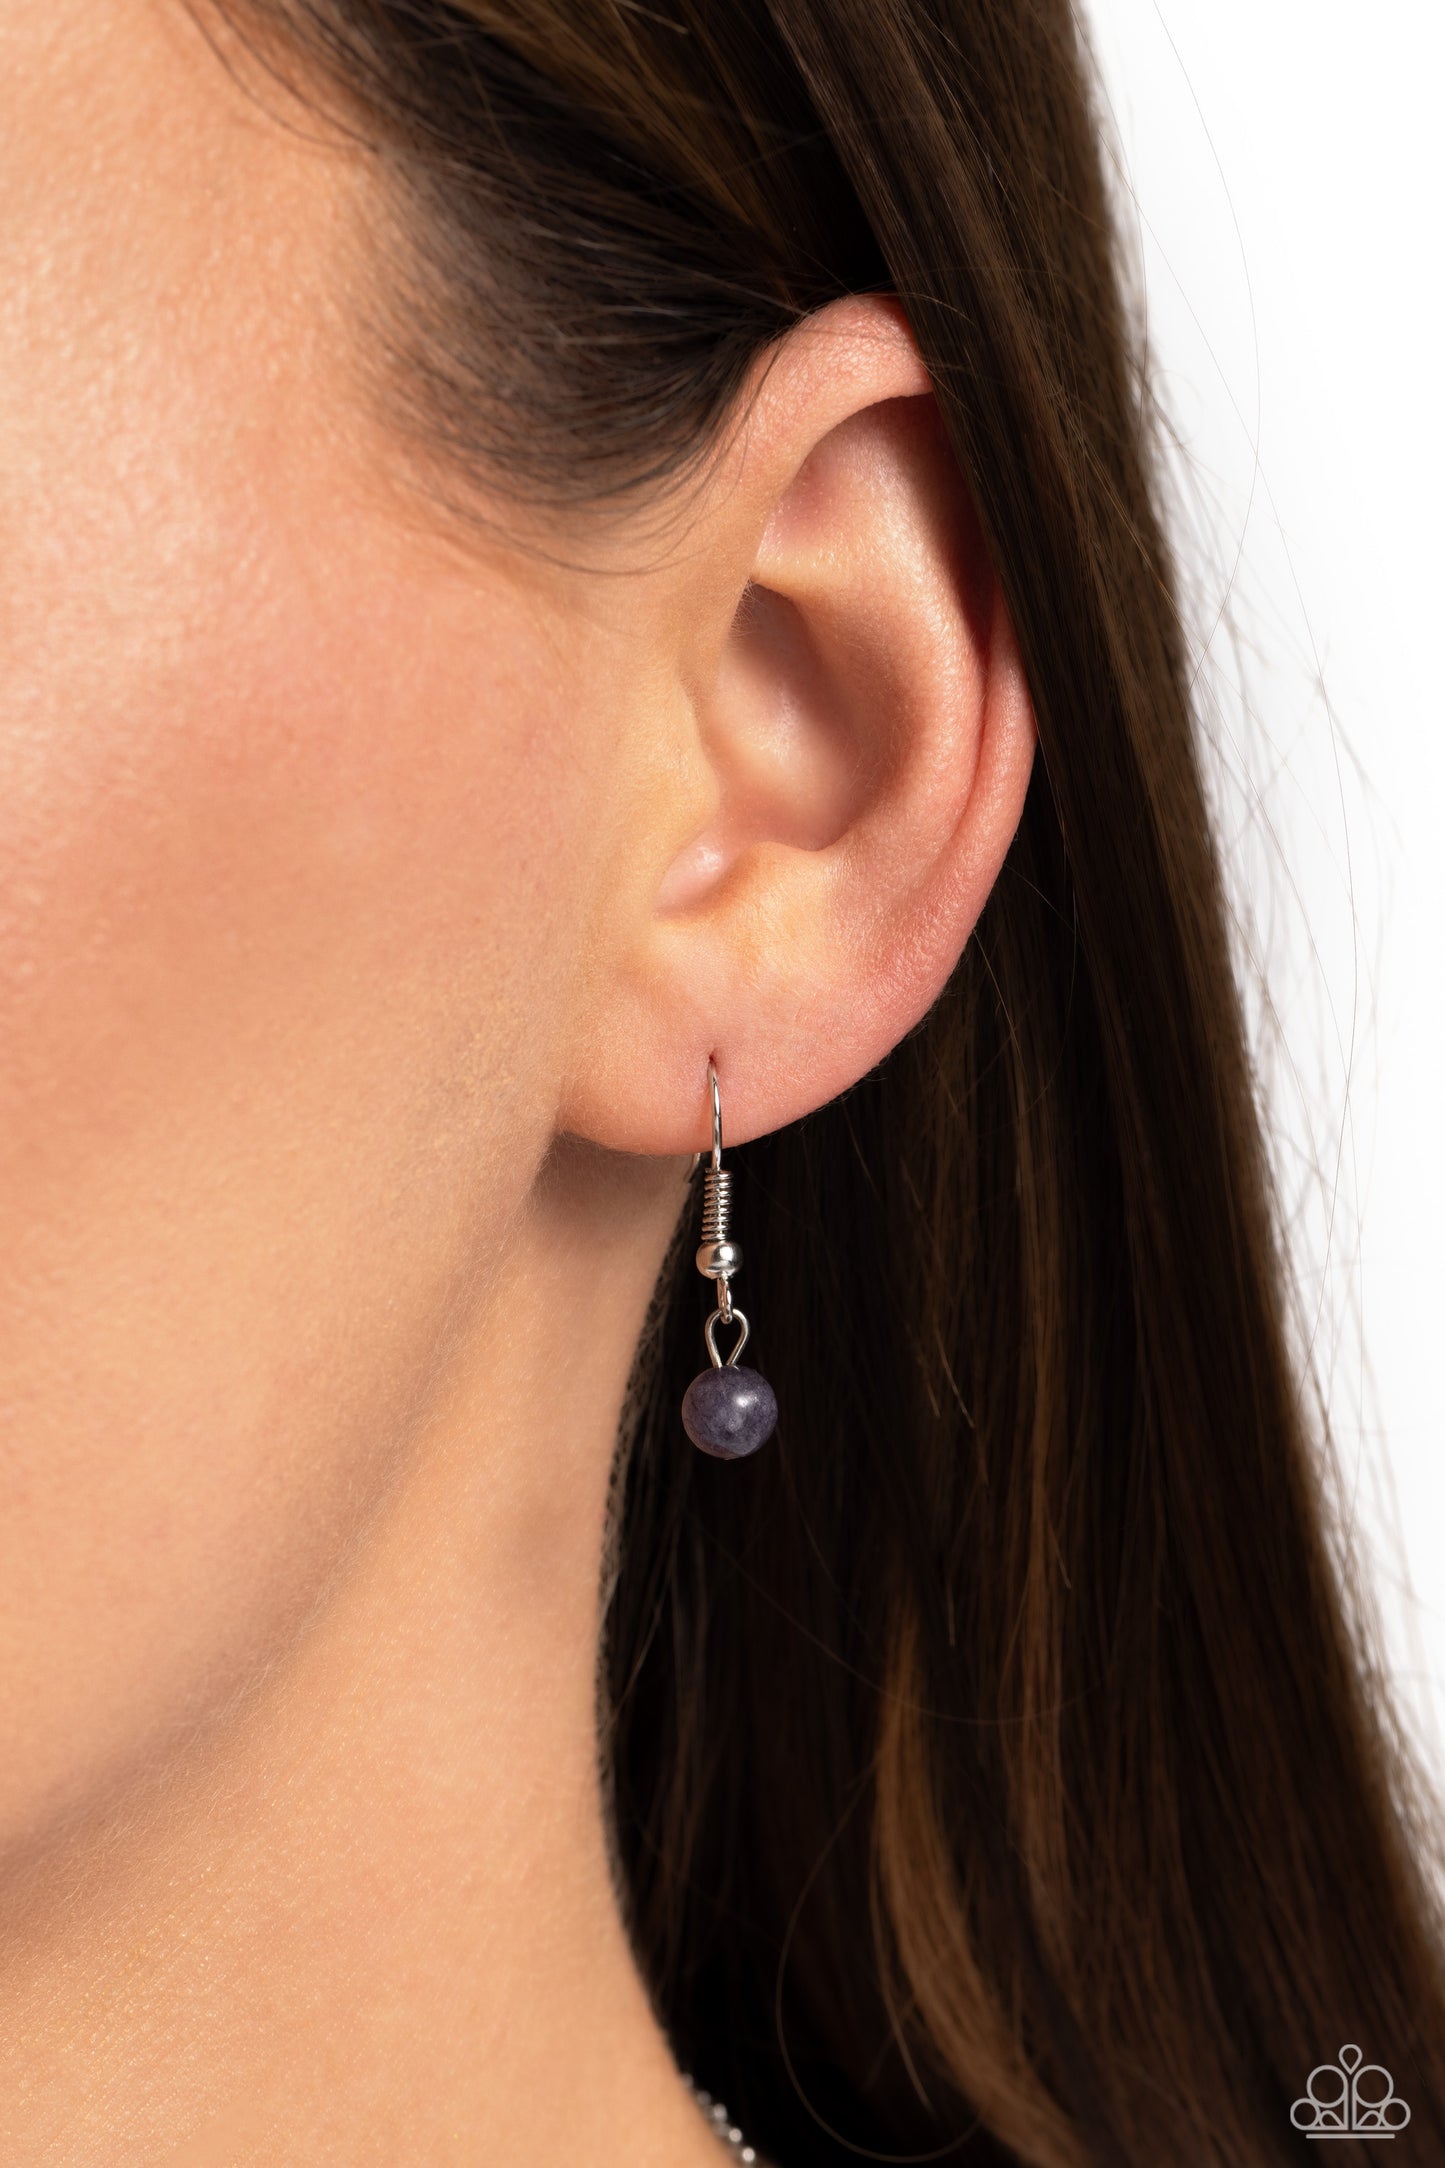 Soulful Serenity - Purple Stone/Silver Bars Pendant Paparazzi Necklace & matching earrings